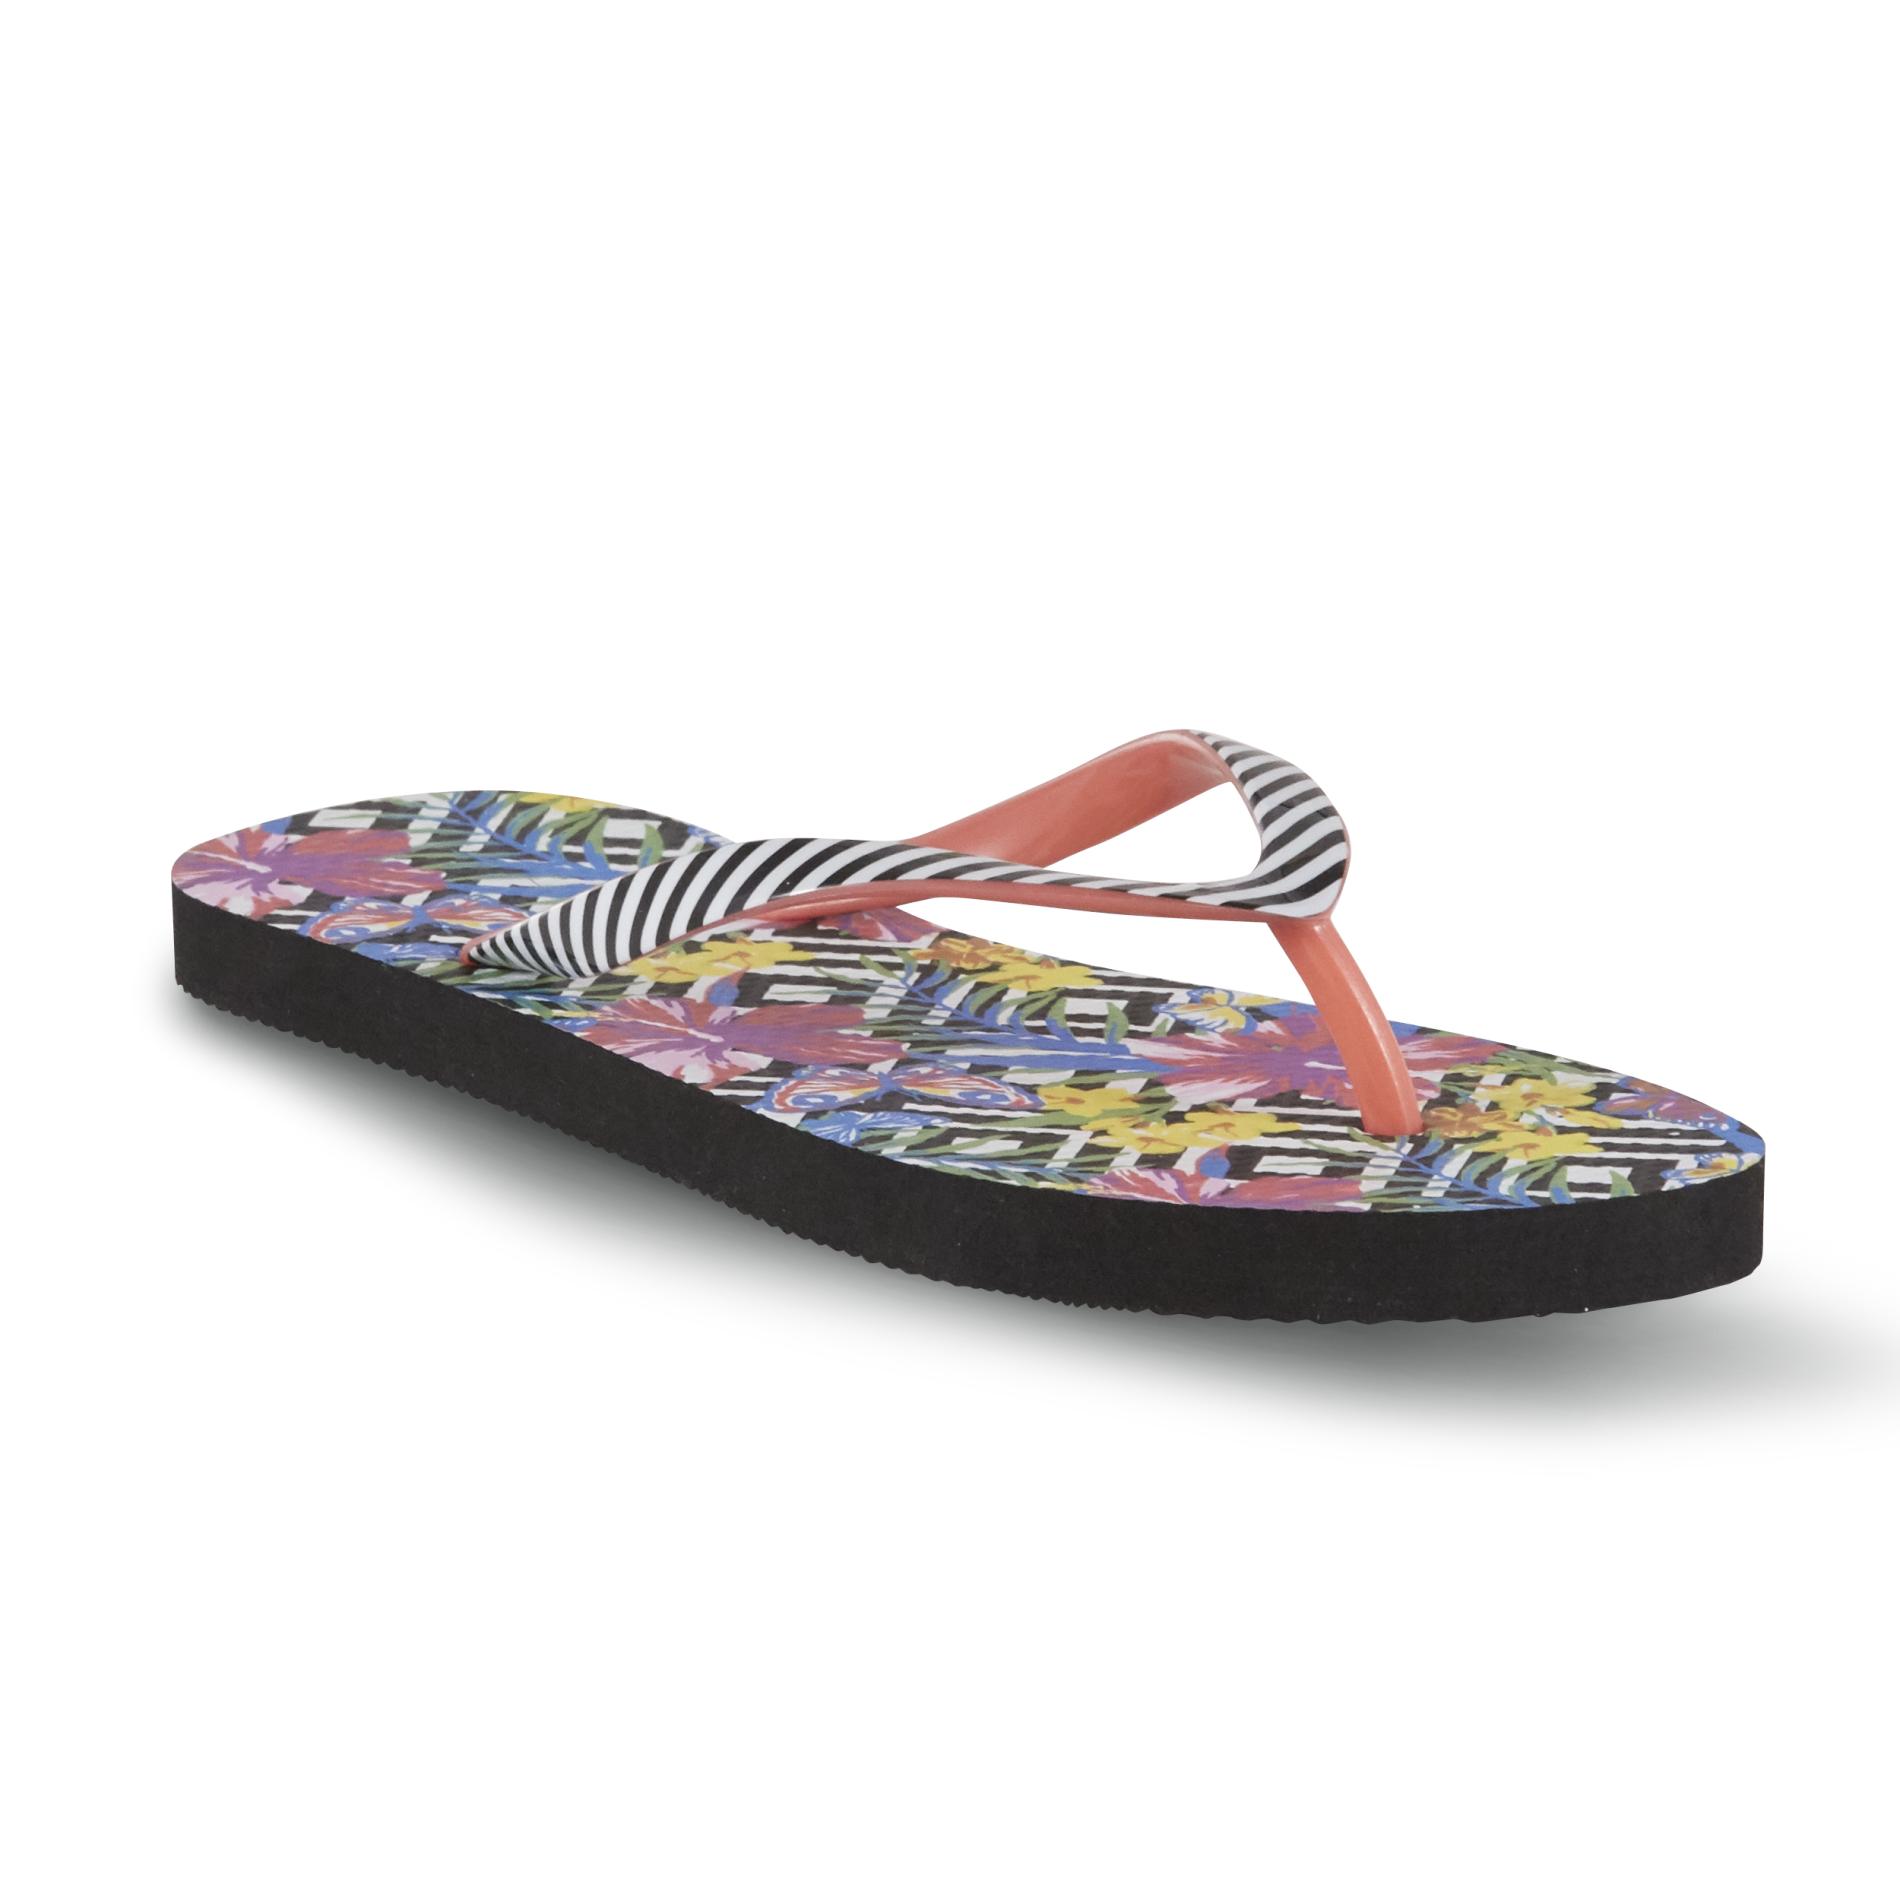 Simply Styled Women's Danie Flip-Flop - Multicolor/Tropical